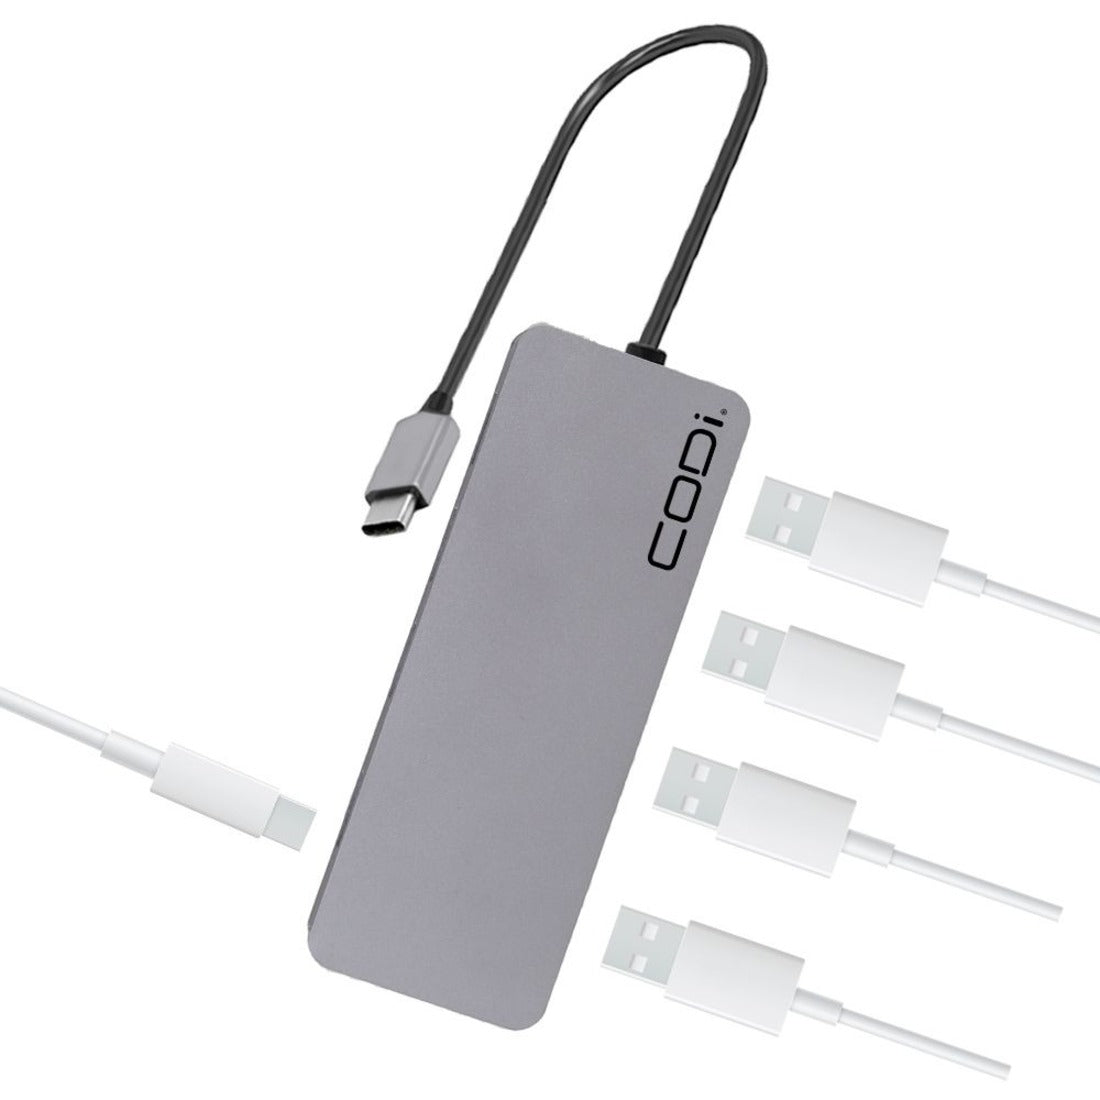 CODi A01065 5合1 多端口集线器，USB Type C，4个 USB 3.0 端口 品牌名称：CODi 品牌翻译：科迪